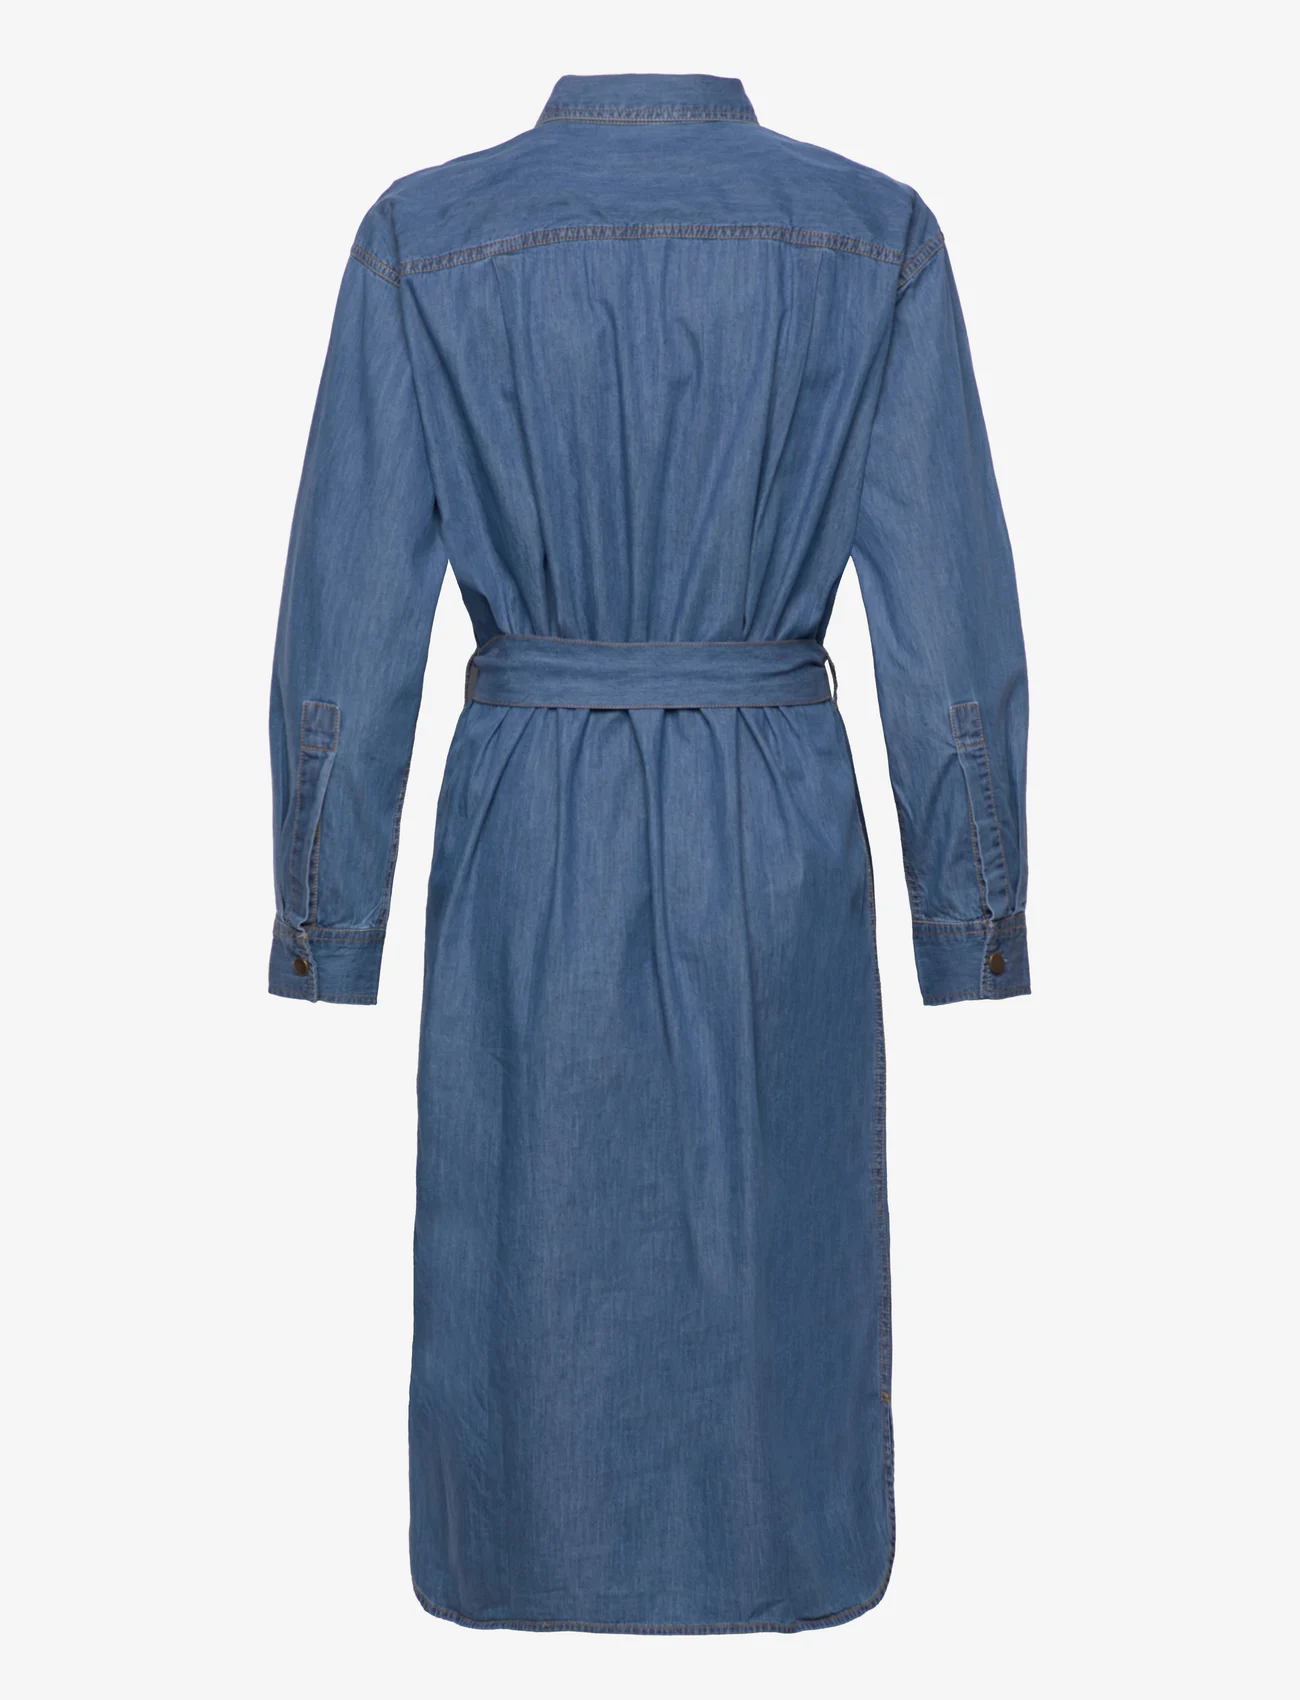 Noa Noa - LouNN Dress - džinsa kleitas - denim blue - 1